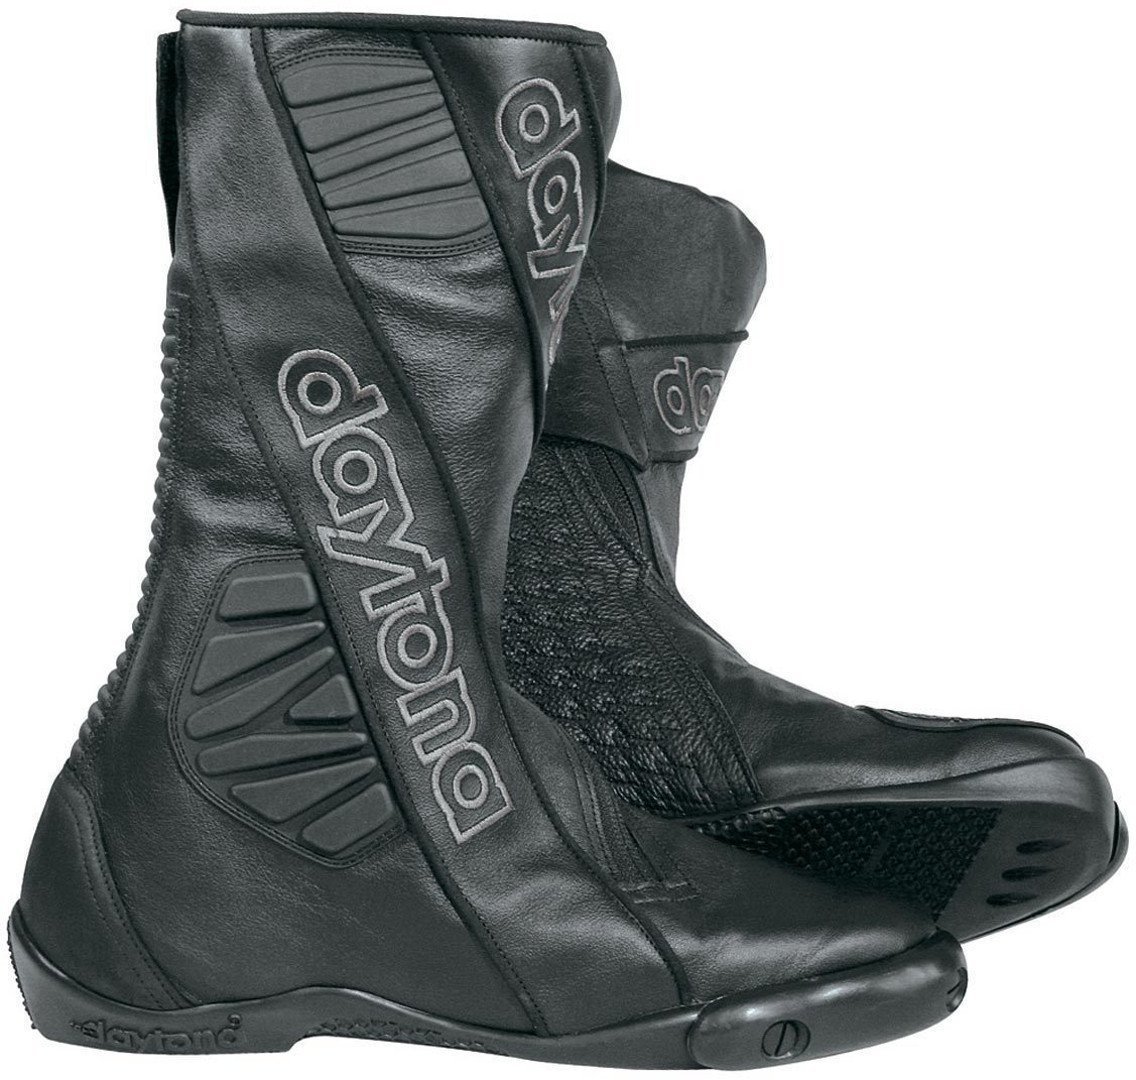 Daytona Security Evo G3 Motorcycle Boots, black, Size 47, black, Size 47